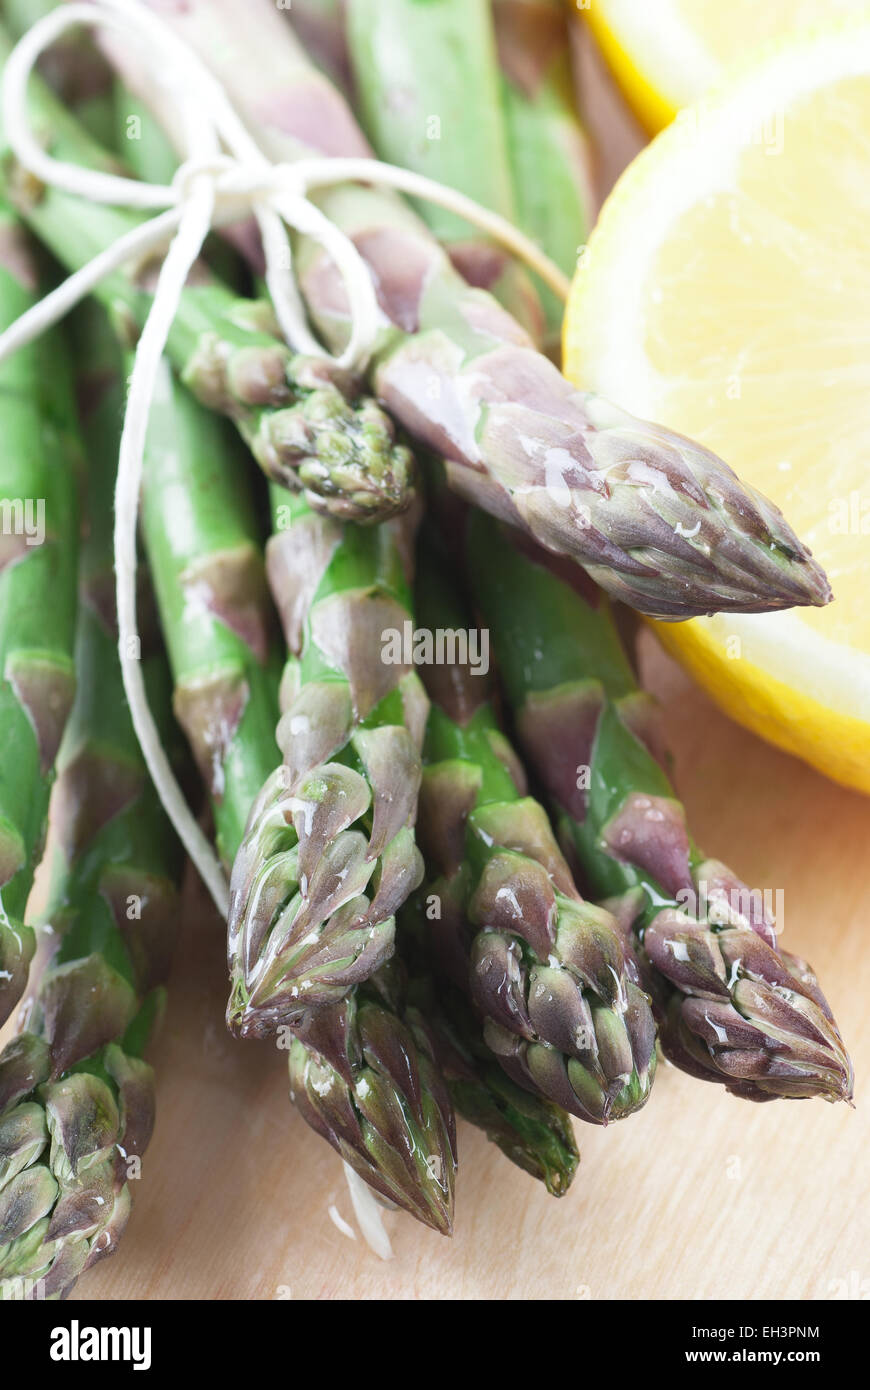 A bunch of fresh green asparagus. Stock Photo